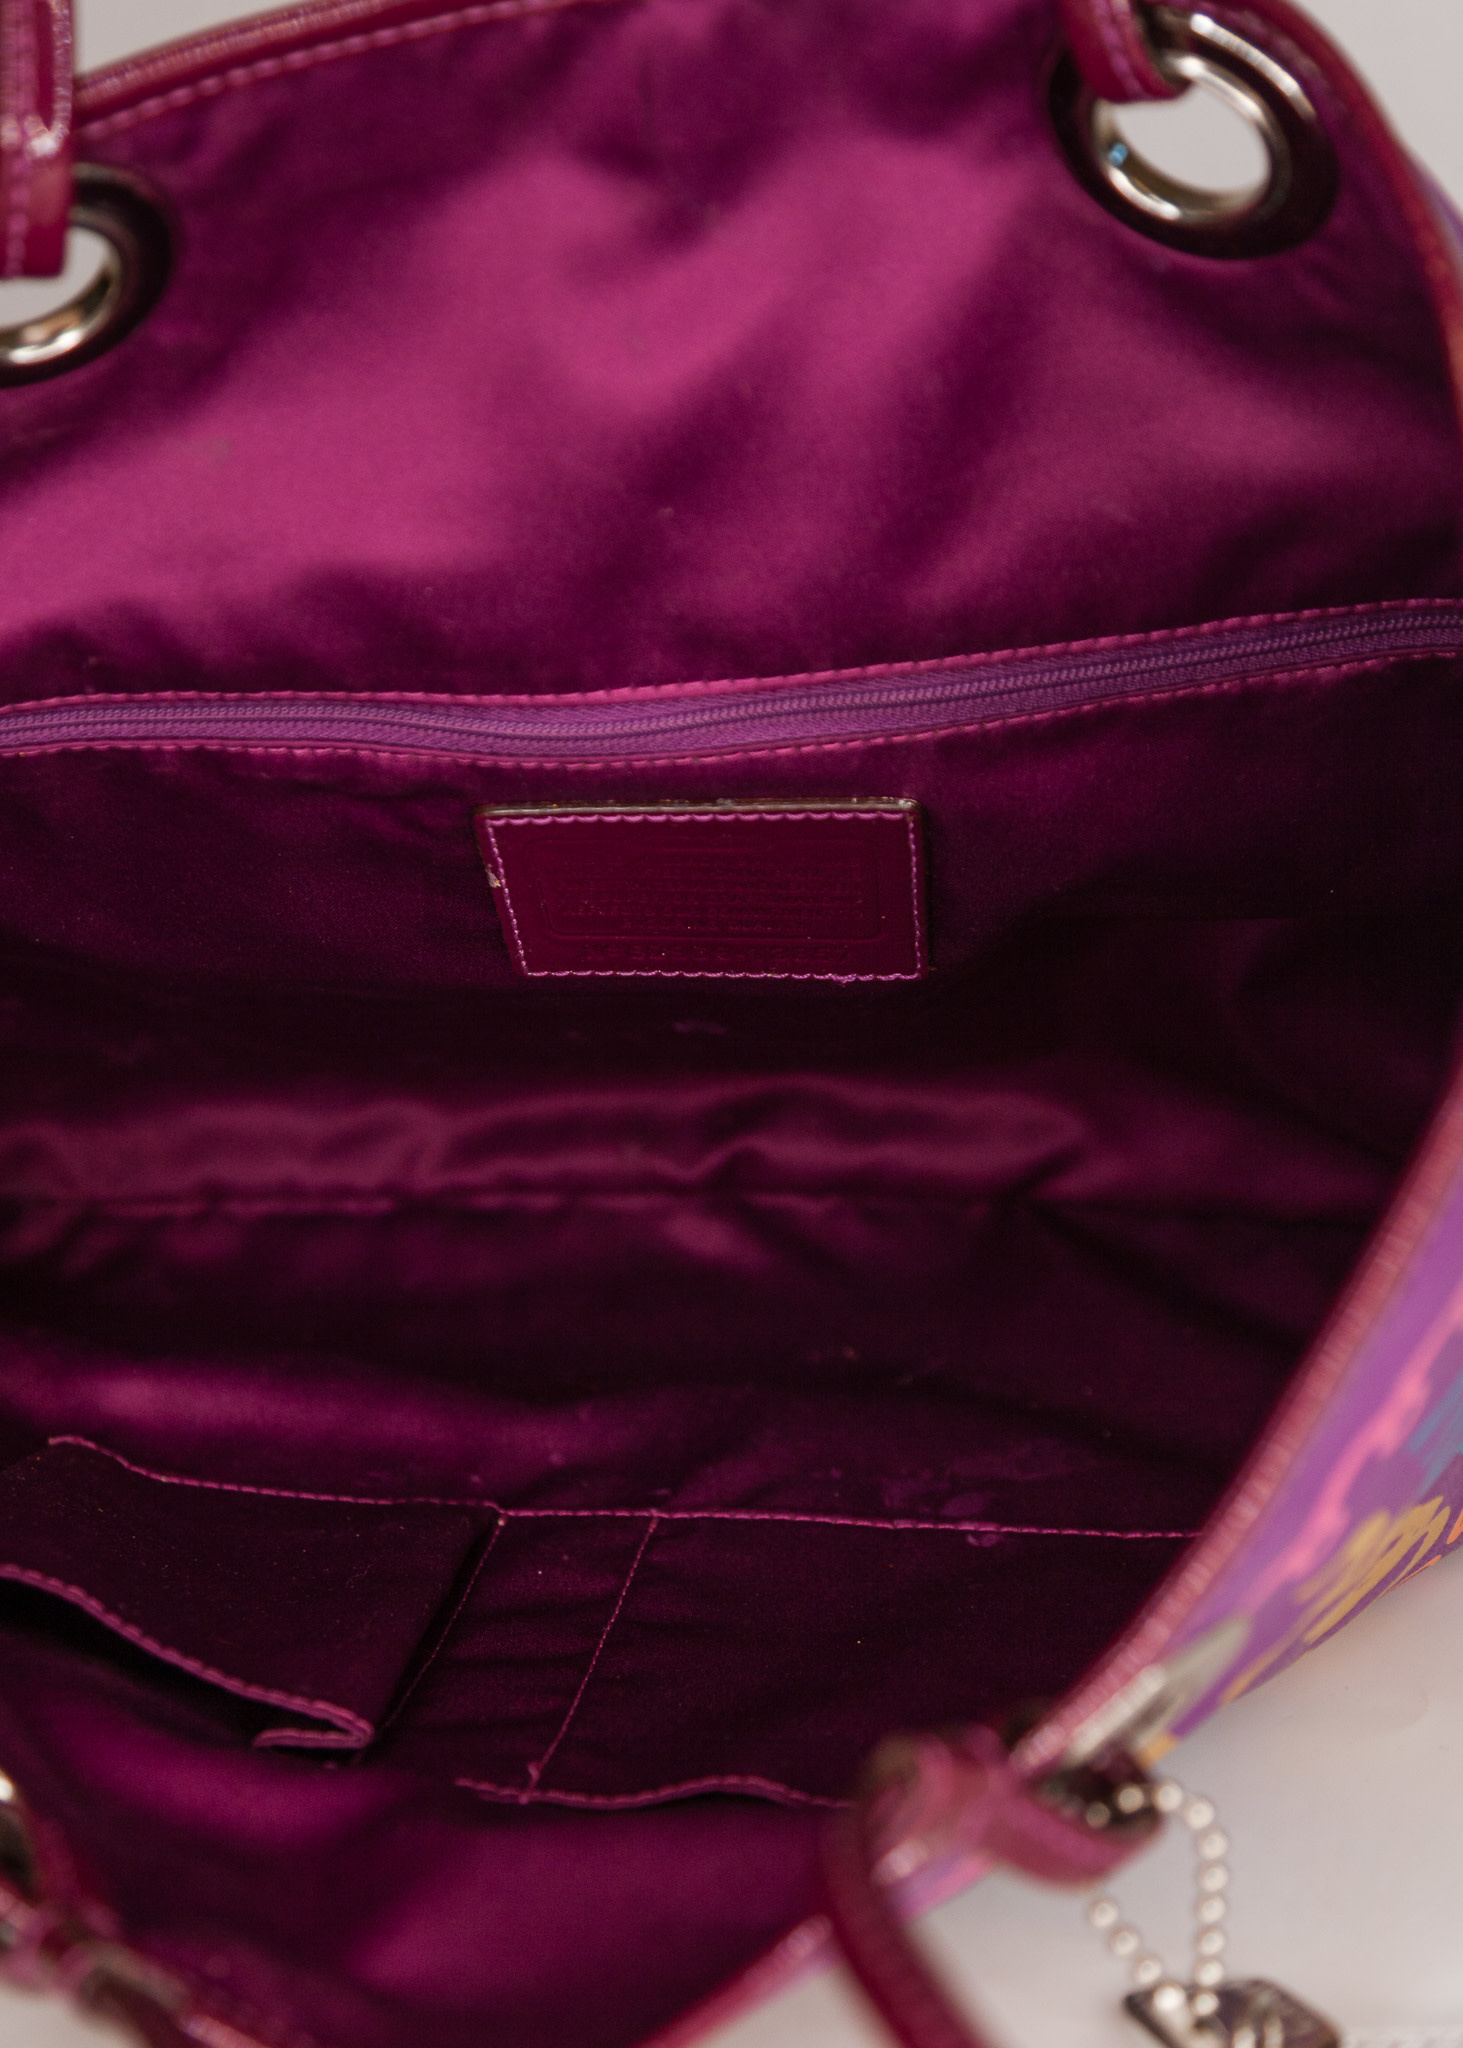 Coach | Bags | Hp Coach Poppy Purple Ocelot Purse H28112048 | Poshmark